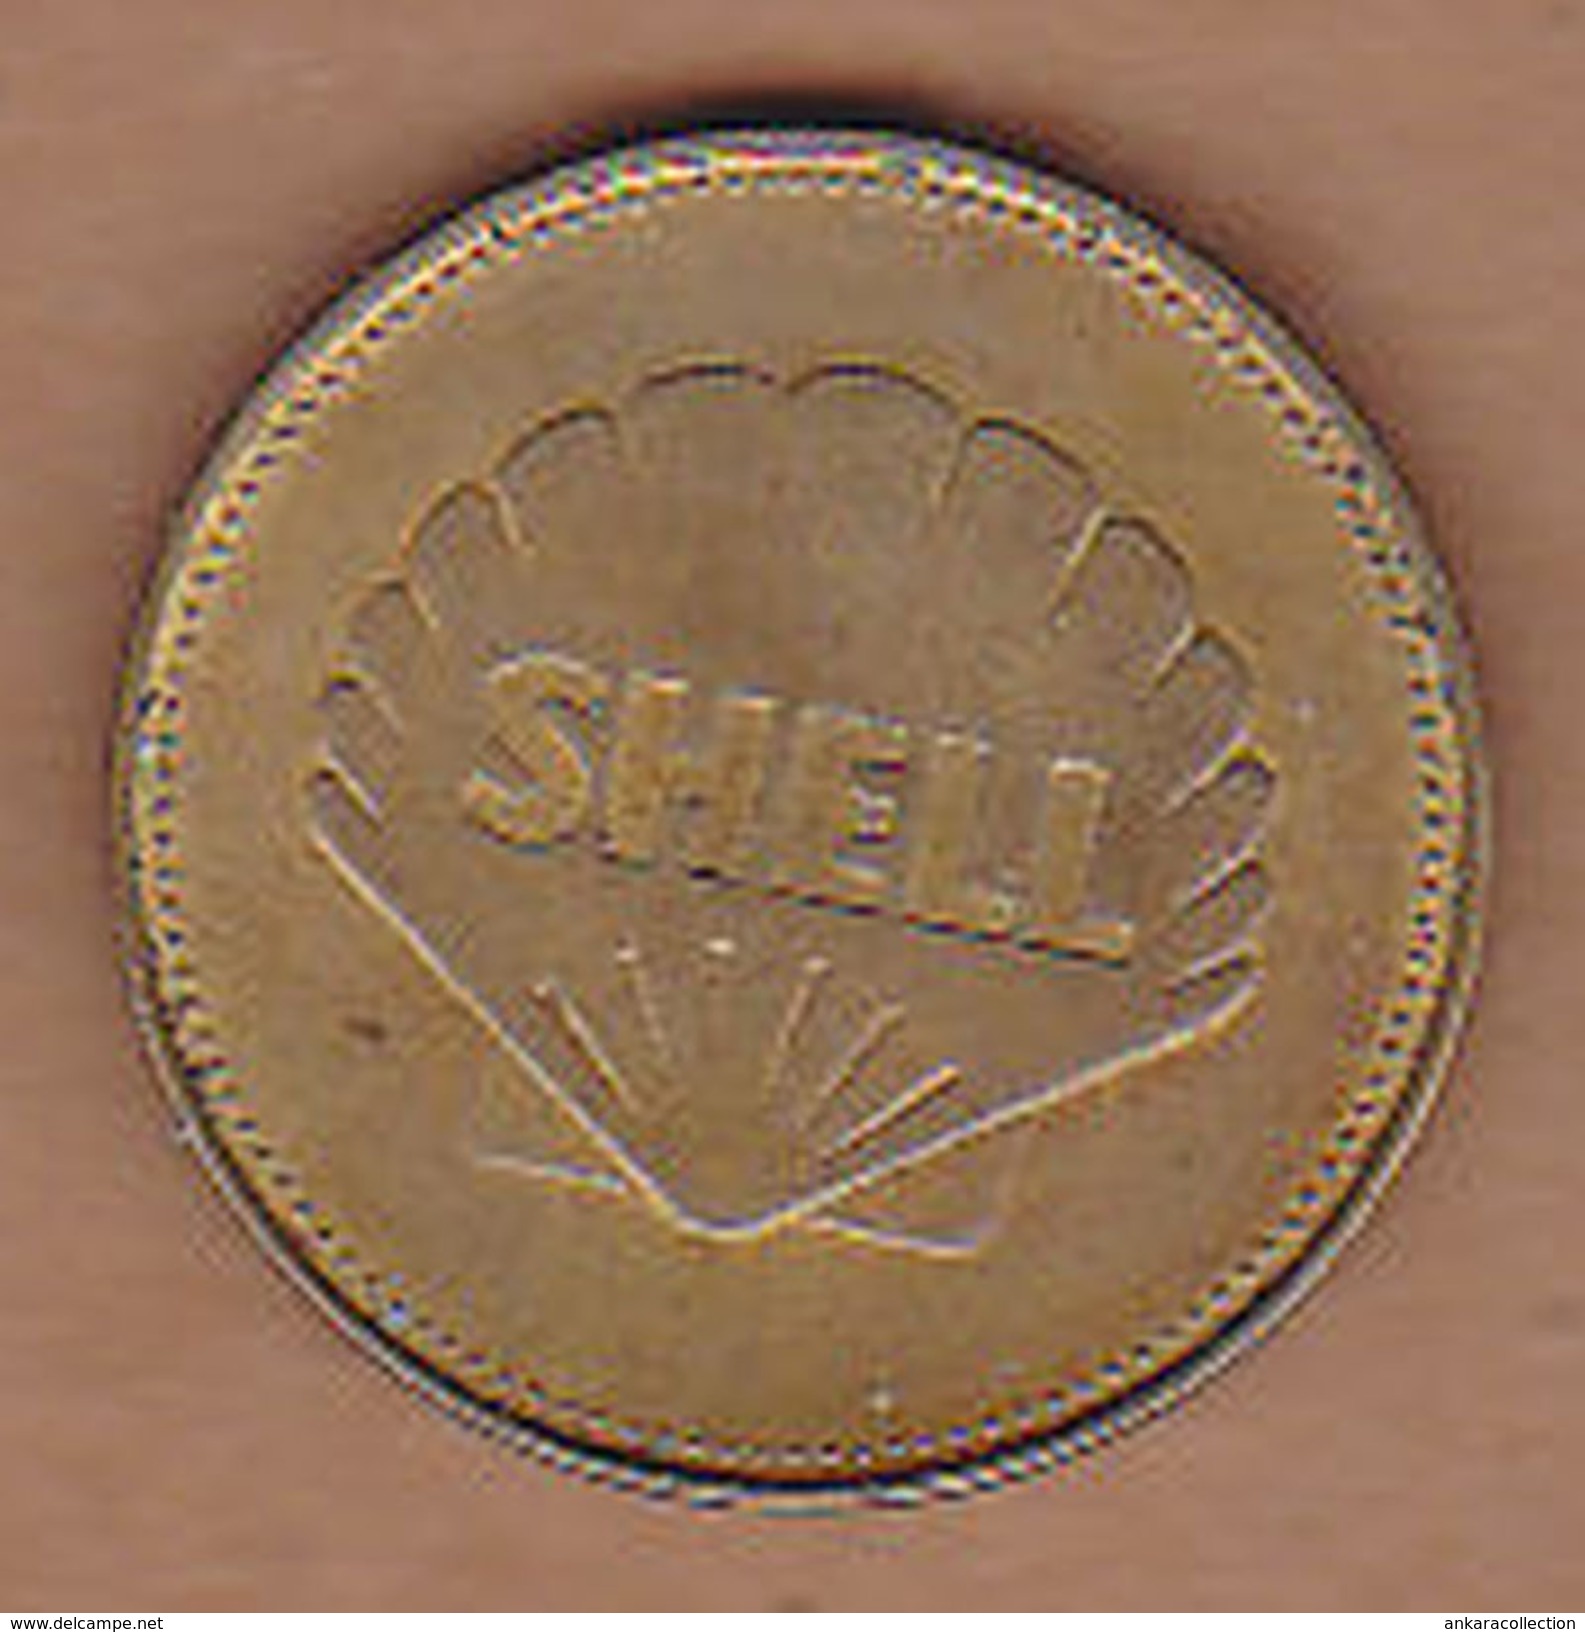 AC -  ARMSTRONG  ALDRIN  AND COLLINS APOLLO 11 1969 SHELL  TOKEN - JETON - Monetary /of Necessity